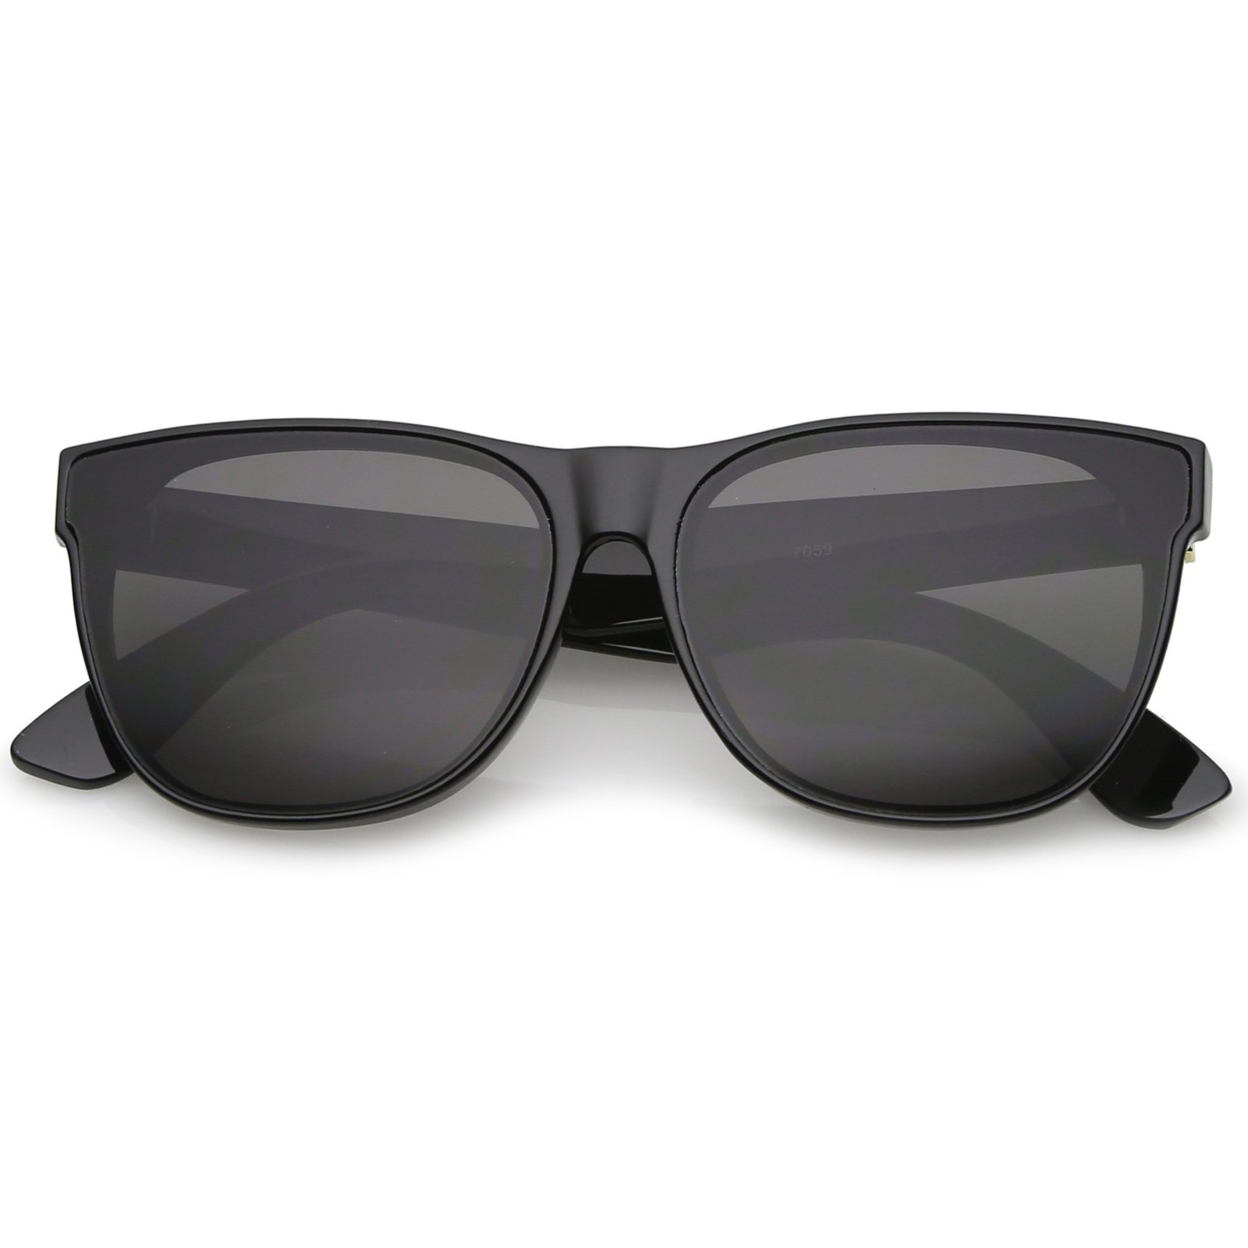 Retro Oversize Wide Temple Square Flat Lens Horn Rimmed Sunglasses 60mm - Shiny Black / Smoke